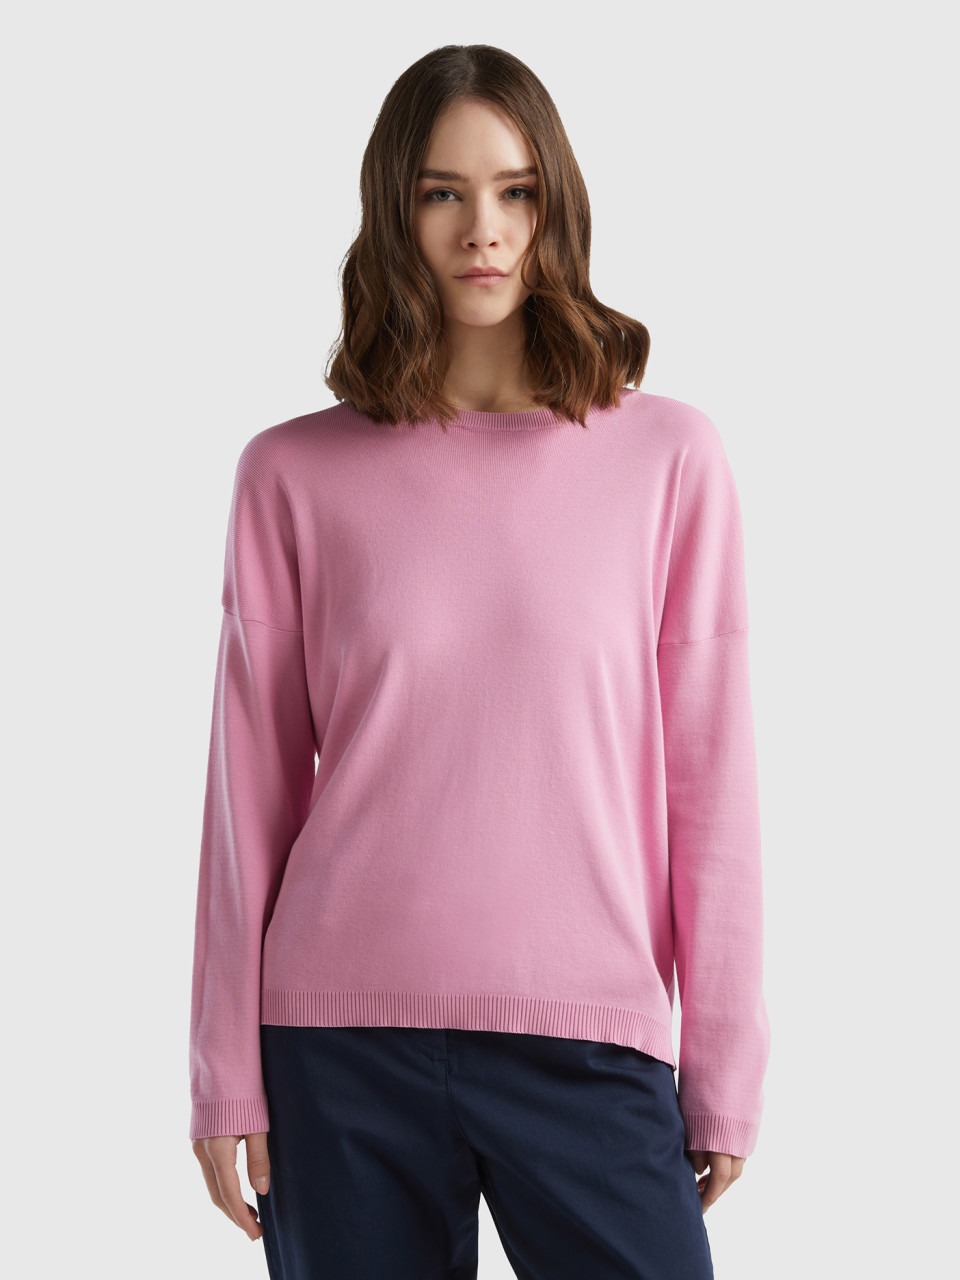 Benetton, Cotton Sweater With Round Neck, Pastel Pink, Women